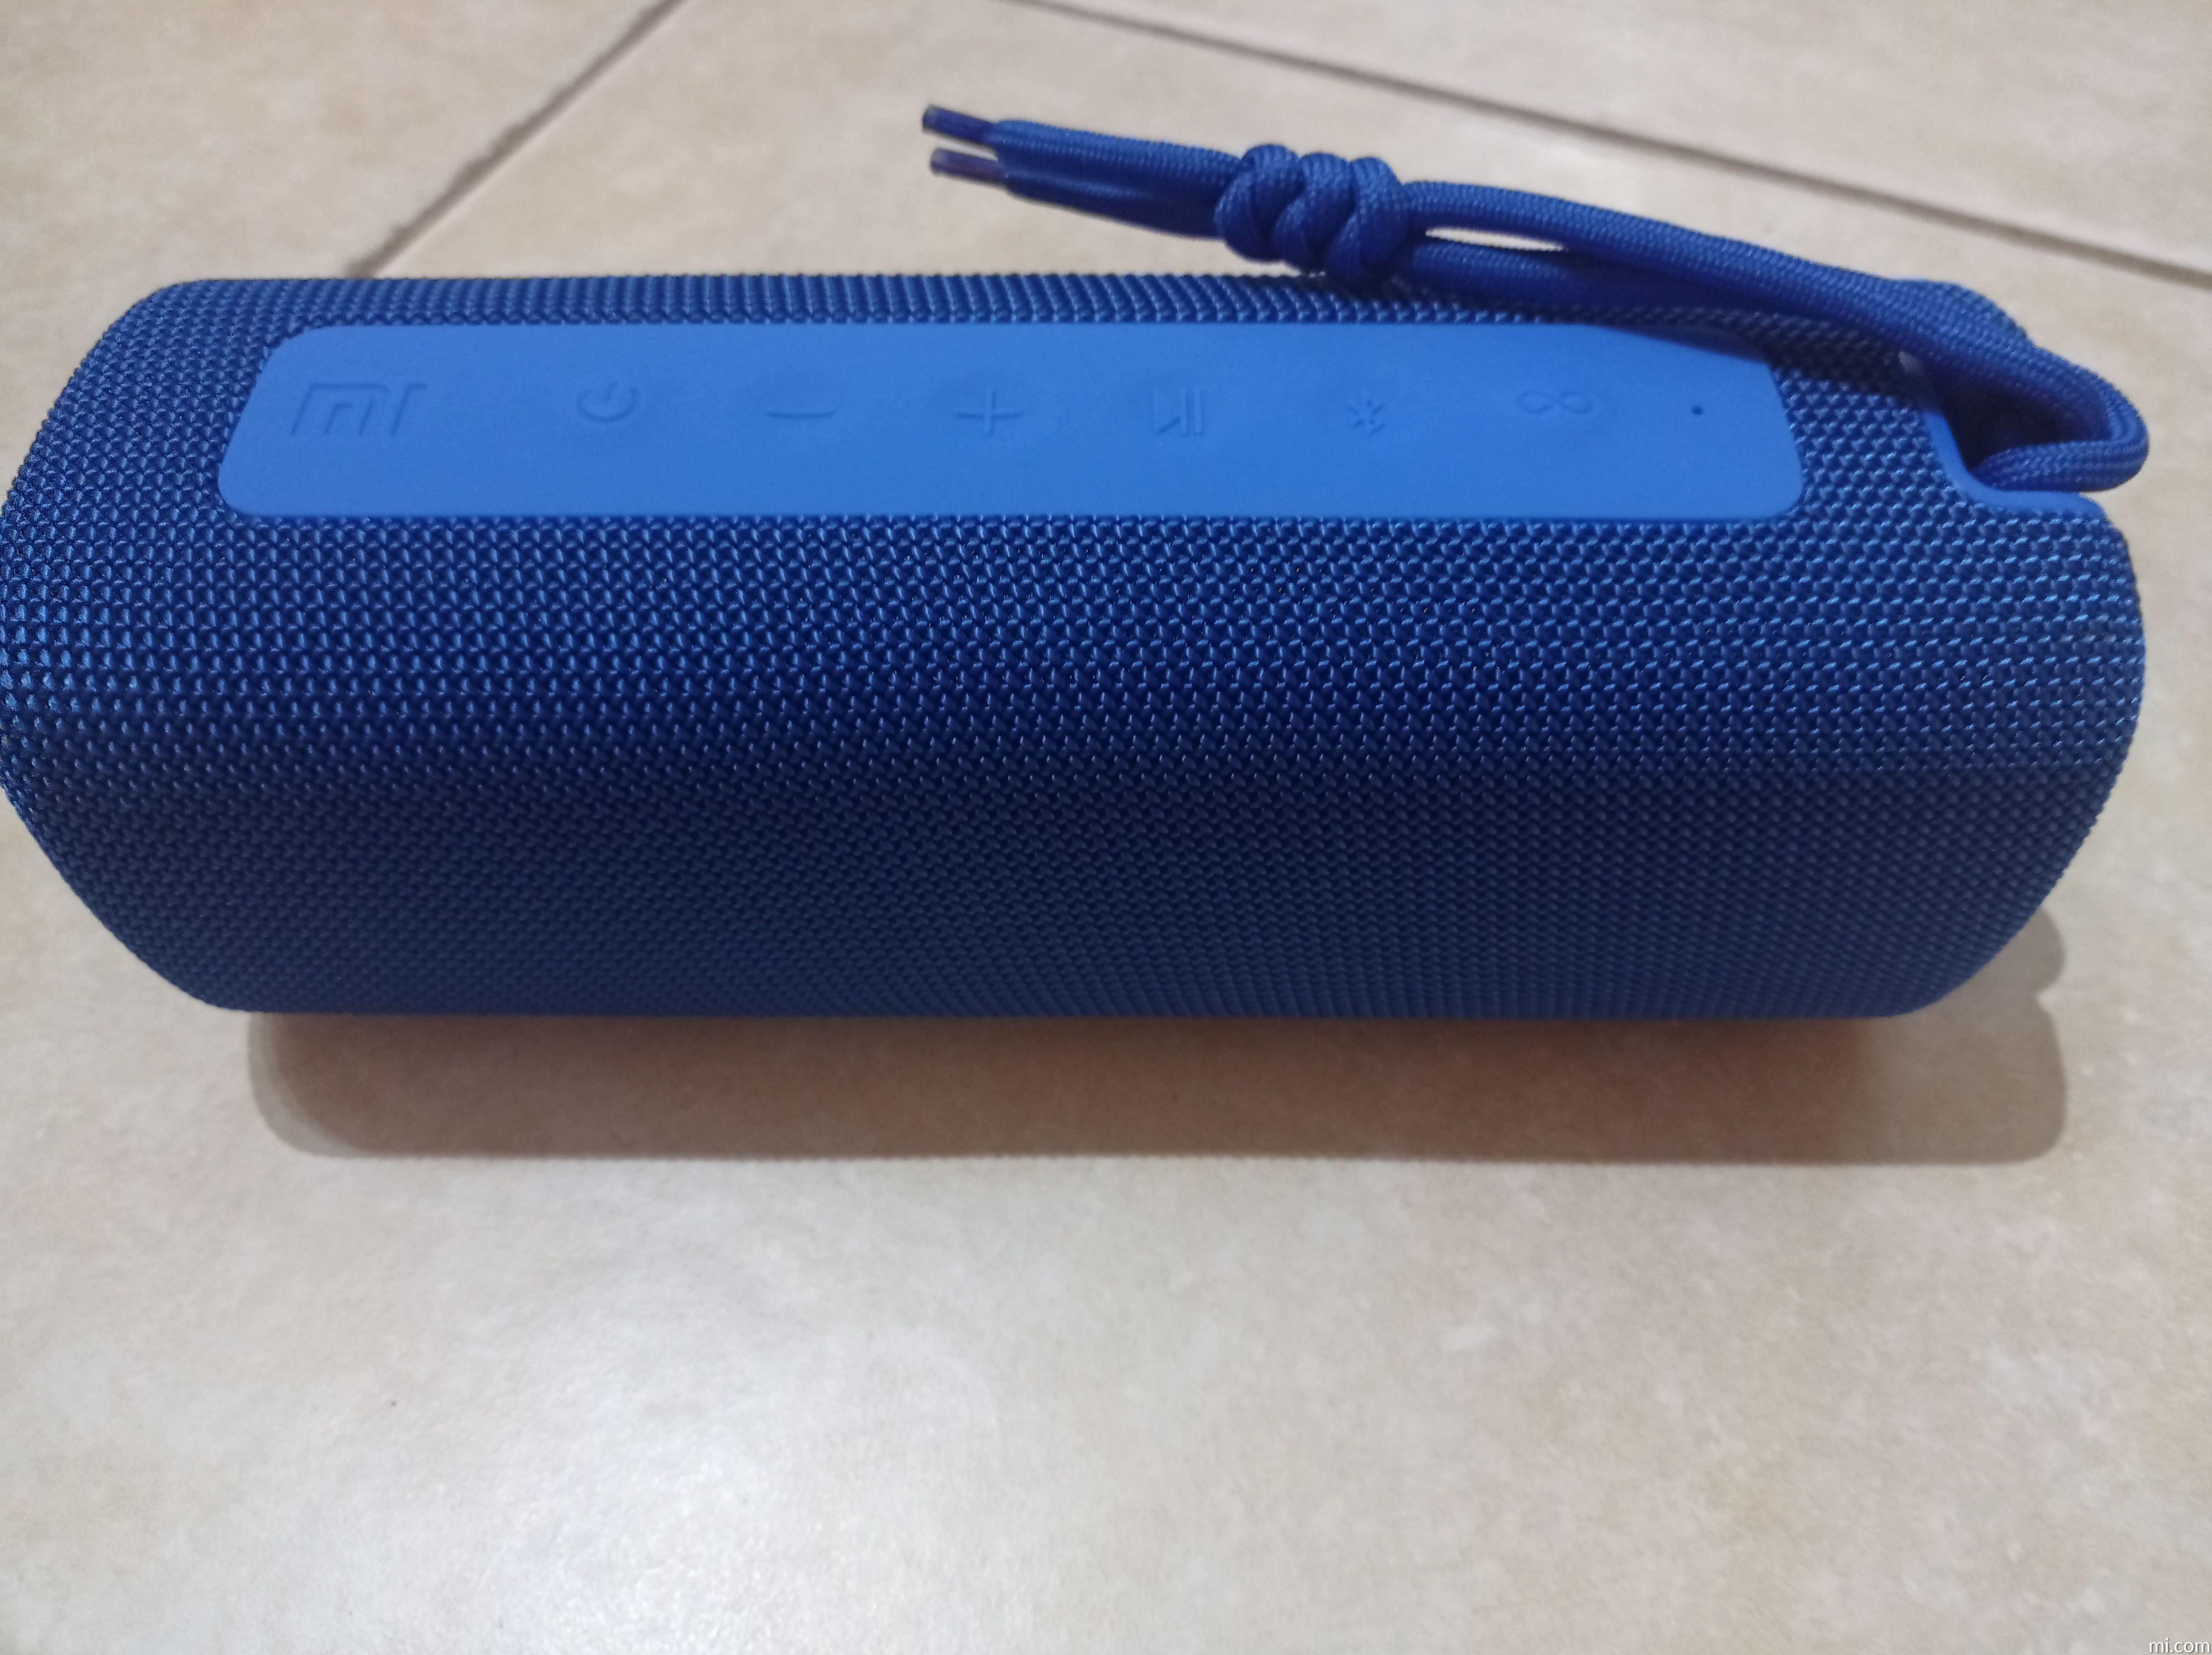 Altavoz Bluetooth Xiaomi Mi Portable Bluetooth Speaker (16W